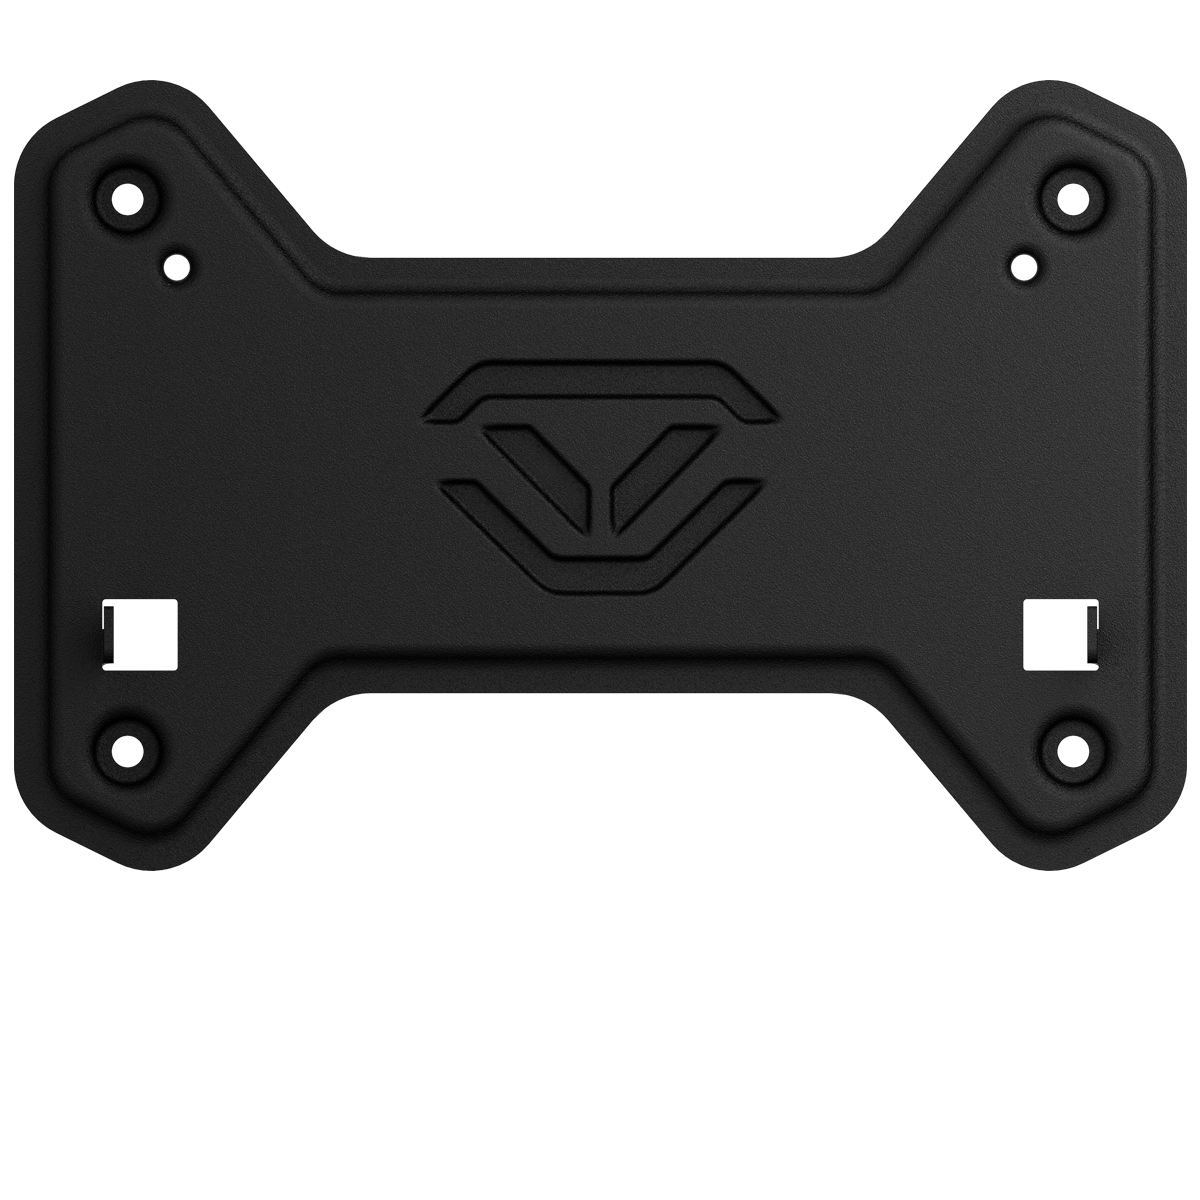 Accessories - Vaultek ML1 Mounting Plate For VT/VE